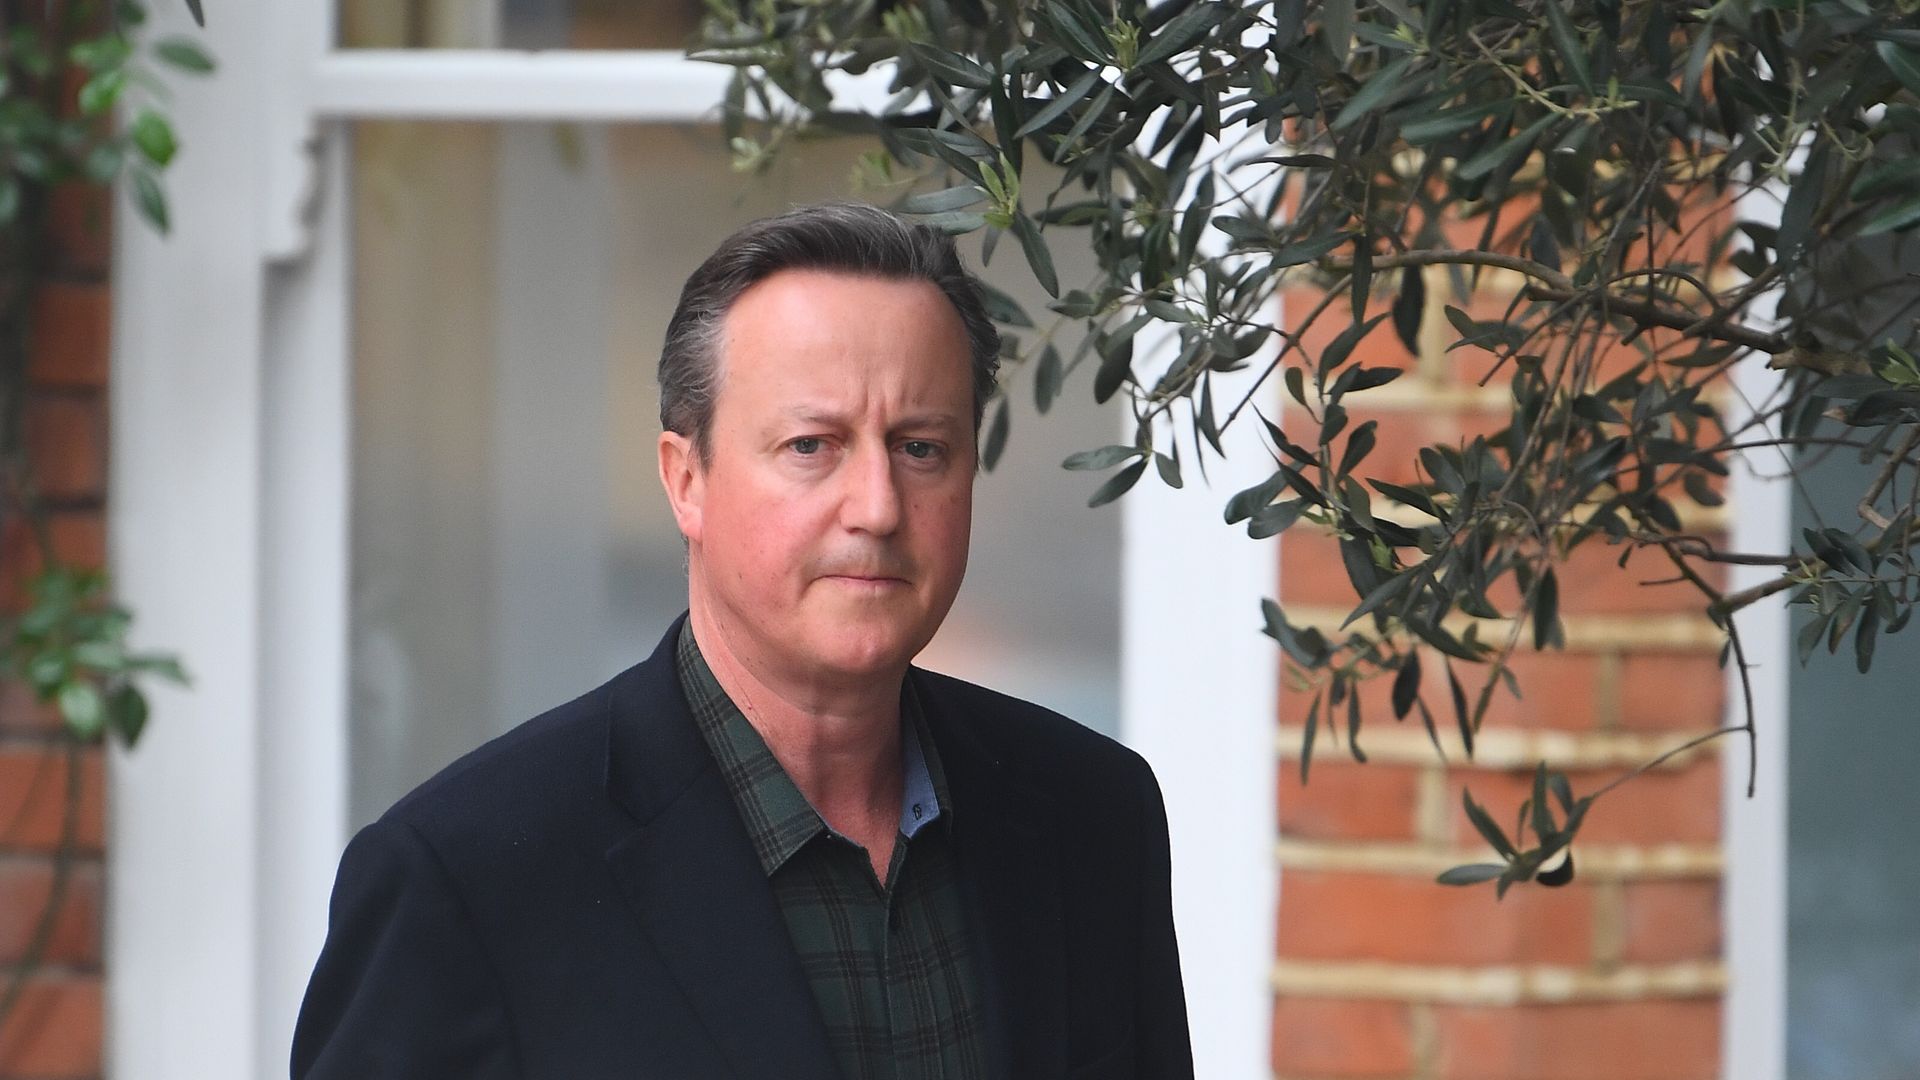 David Cameron outside his London home - Credit: PA